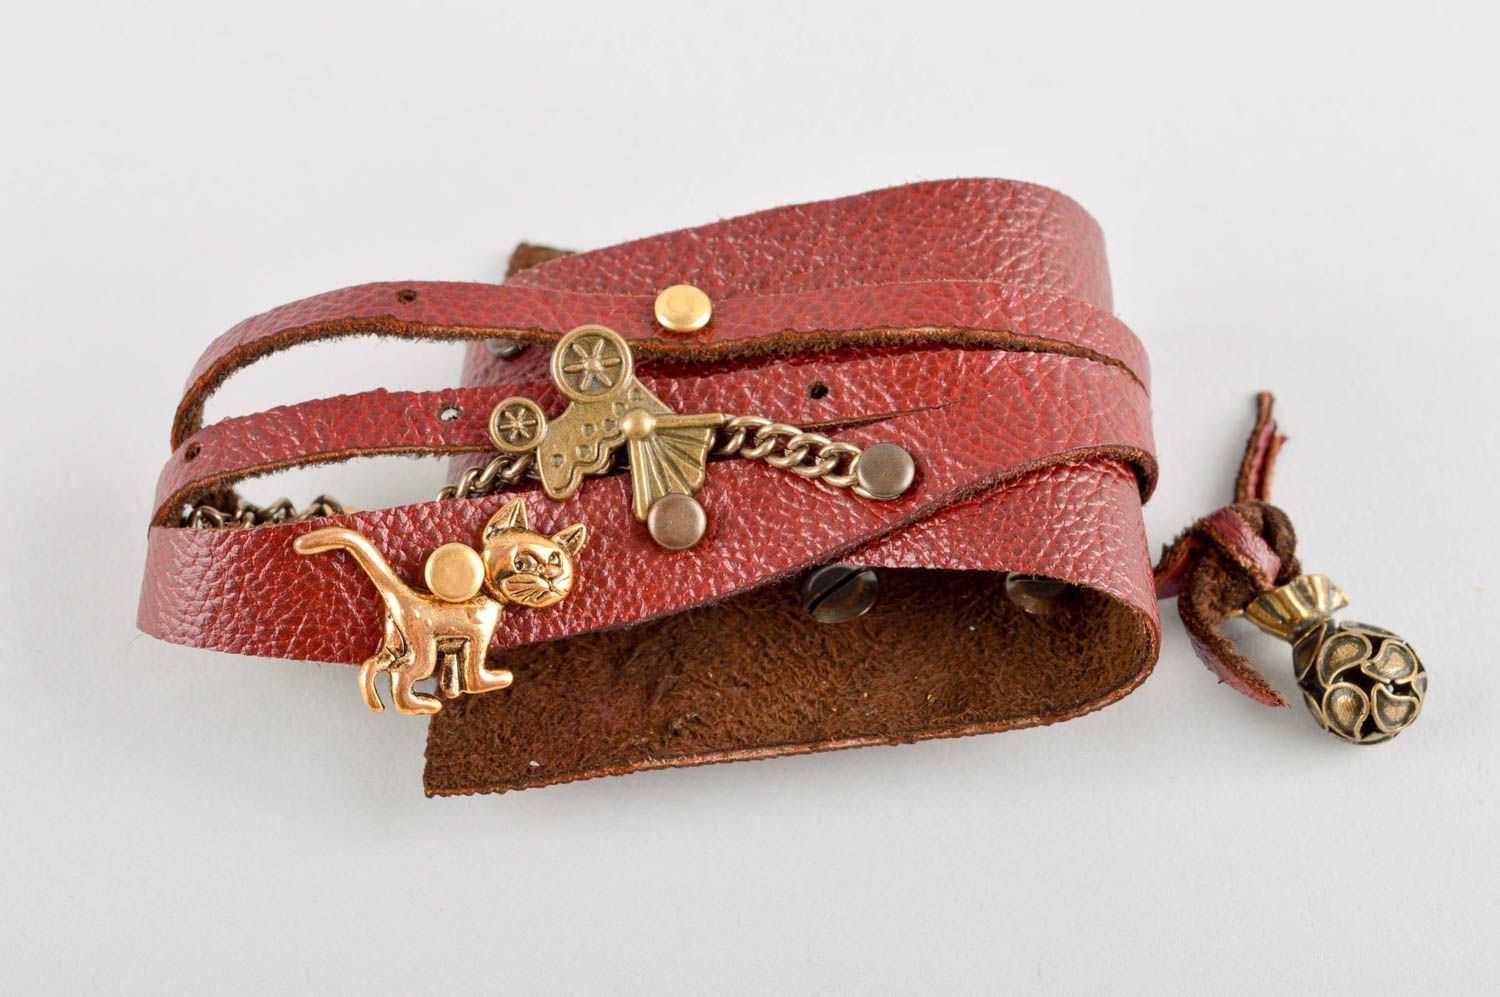 Unusual handmade leather bracelet cool jewelry wrist bracelet designs gift ideas photo 2